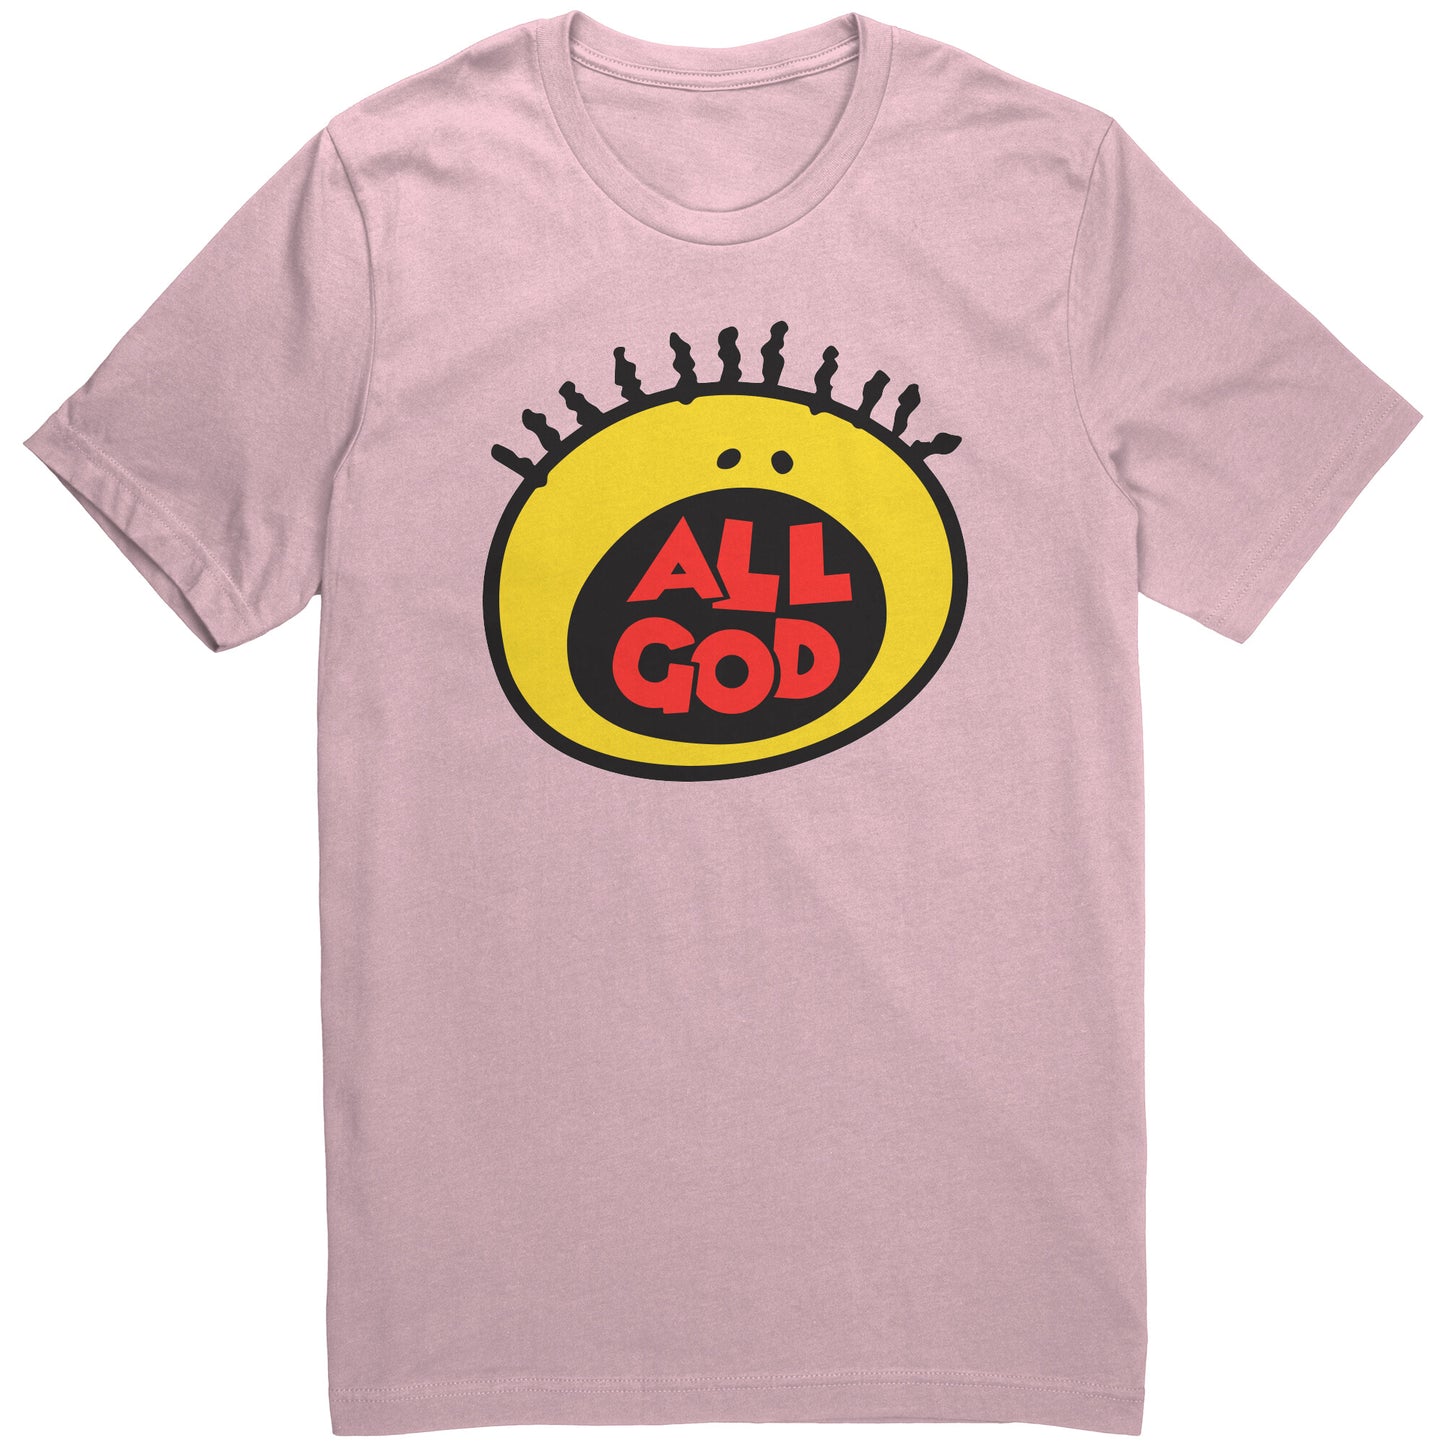 All God t-shirt